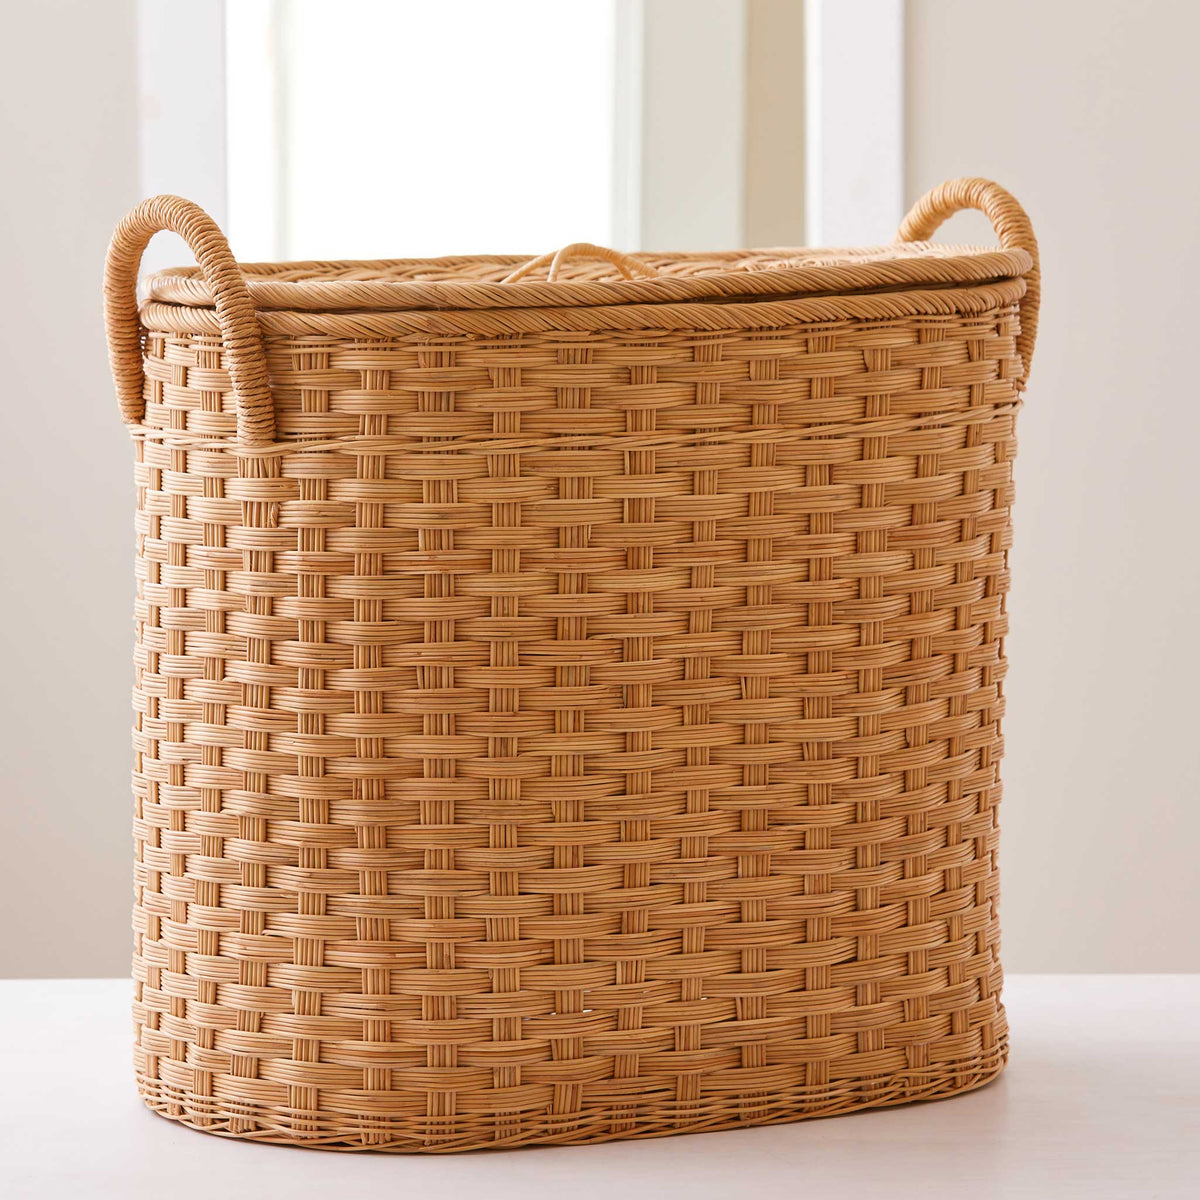 Oval rattan storage basket. Unique storage baskets with lids &amp; handles. 5 sizes. Extra Large basket shown. Great basket for storage. XL, L, M, S, XS.